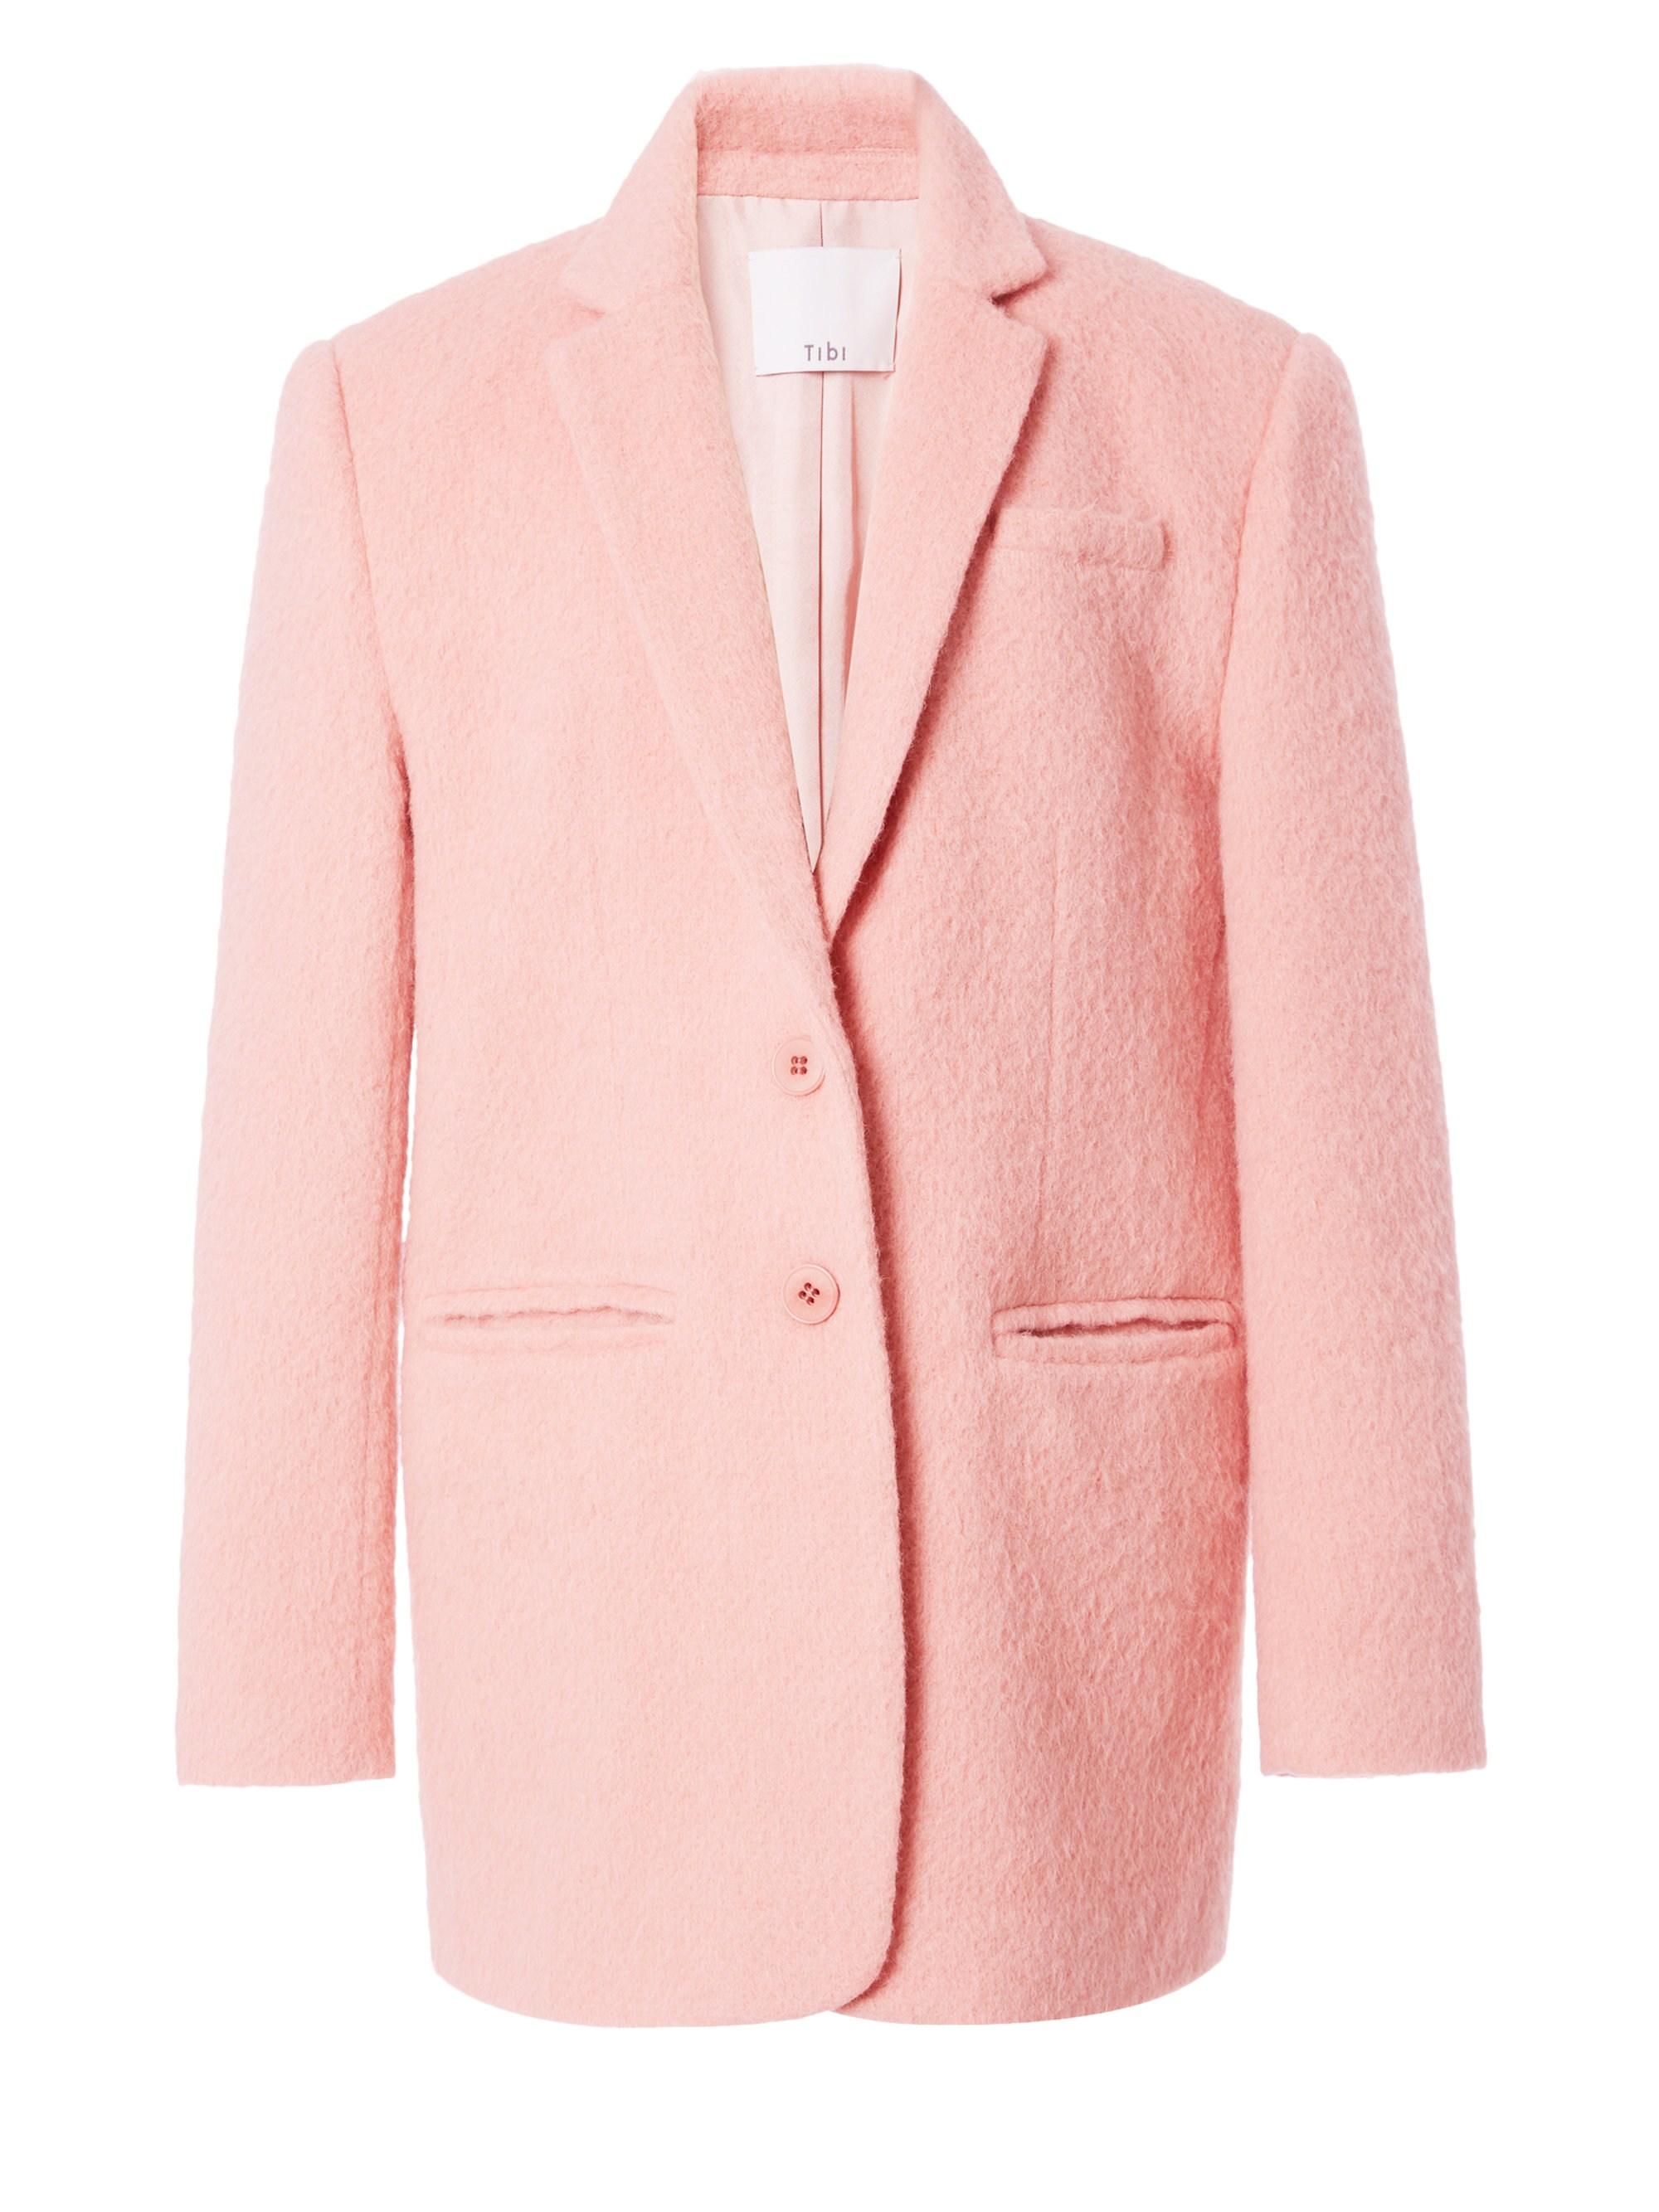 Tibi Women's Oversized Wool Blazer - Pink Haze - Size Xxs in Pink - Lyst